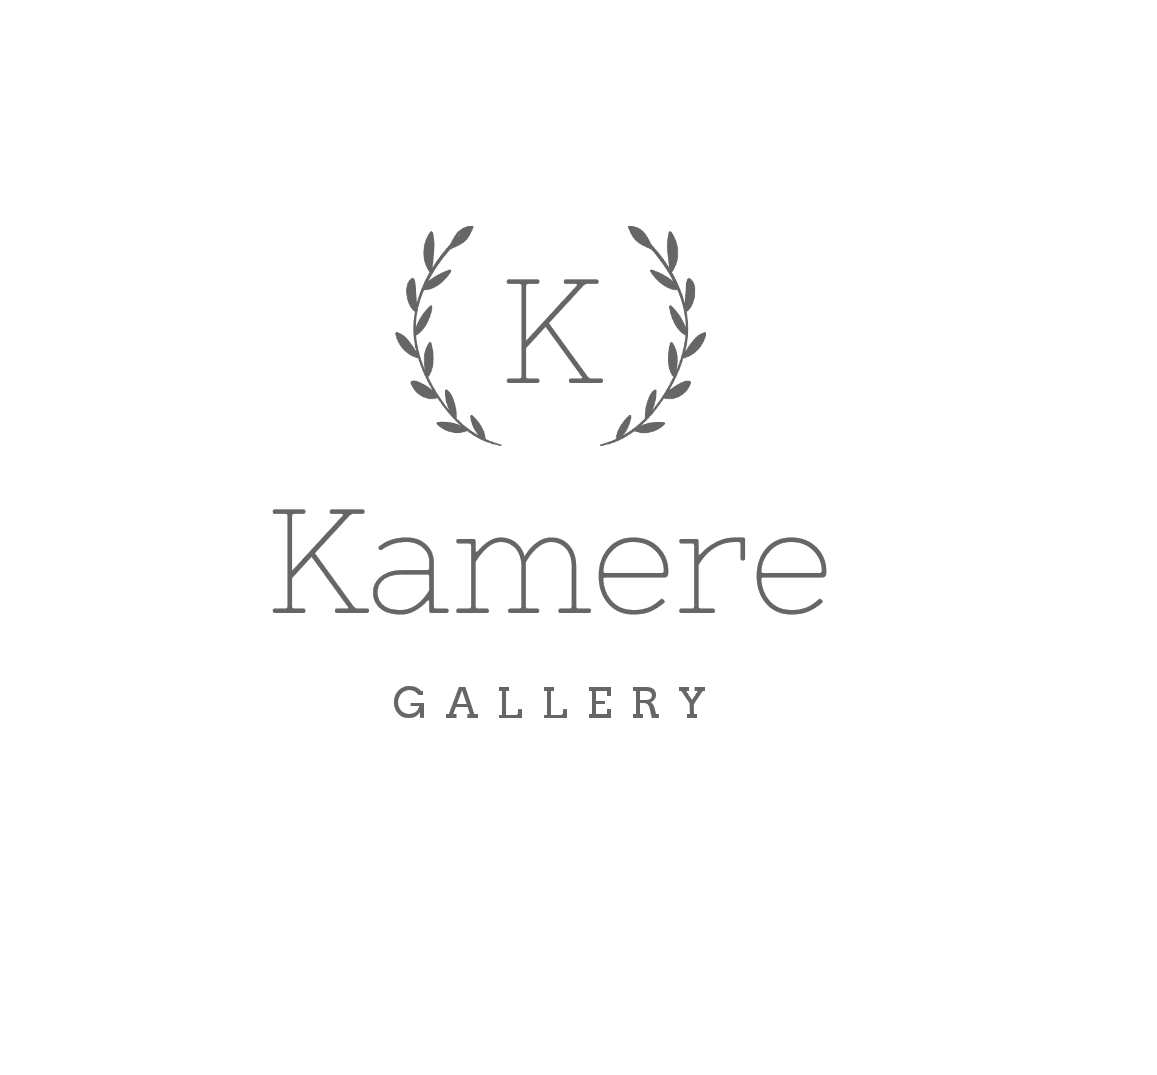 Kamere Gallery of African Art